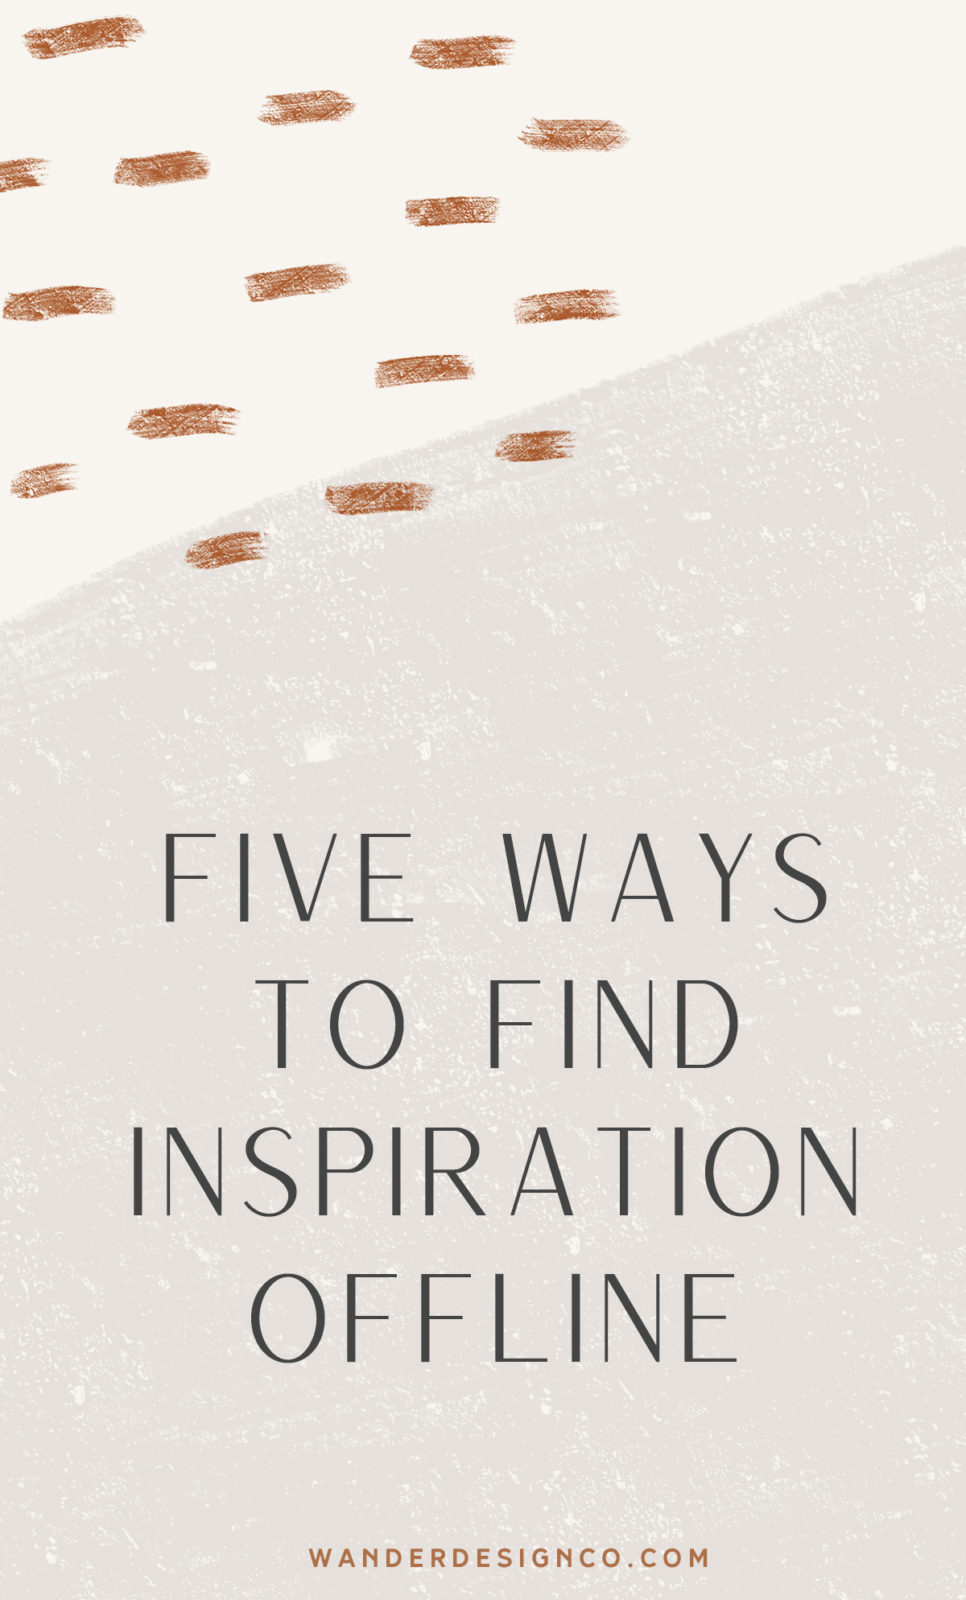 Five Ways to Find Inspiration Offline from Wander Design Co.